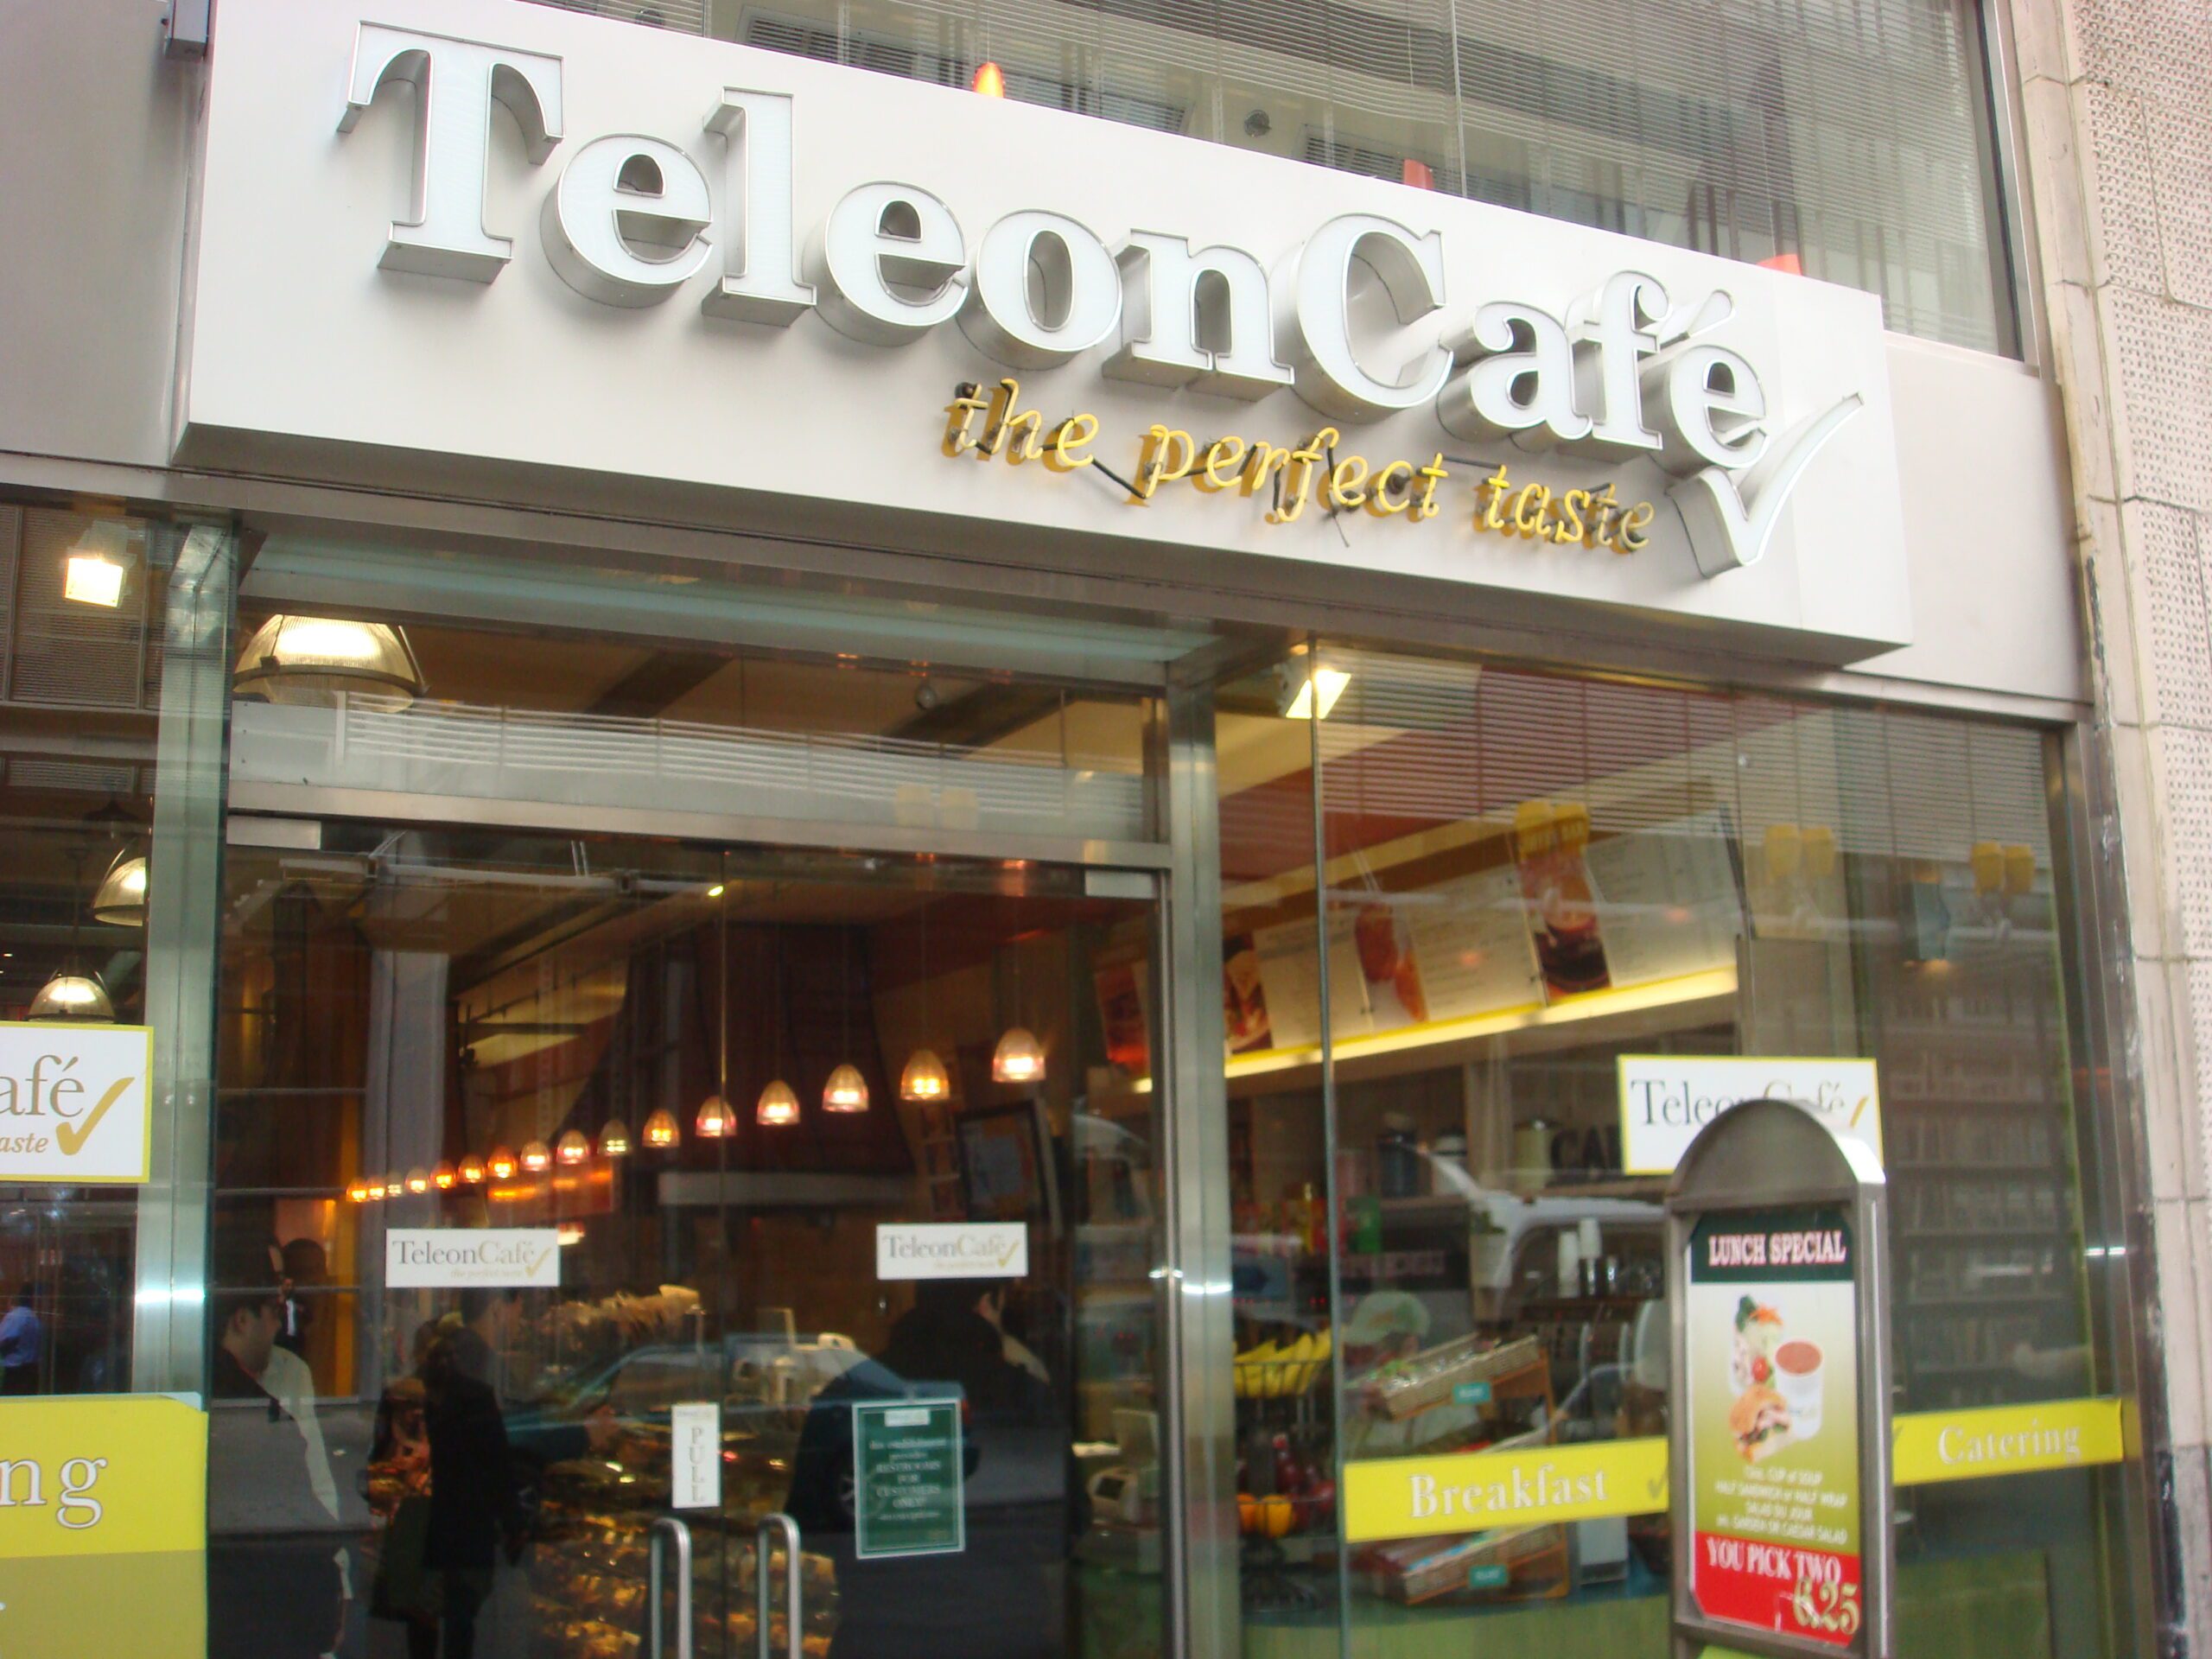 Teleon Cafe